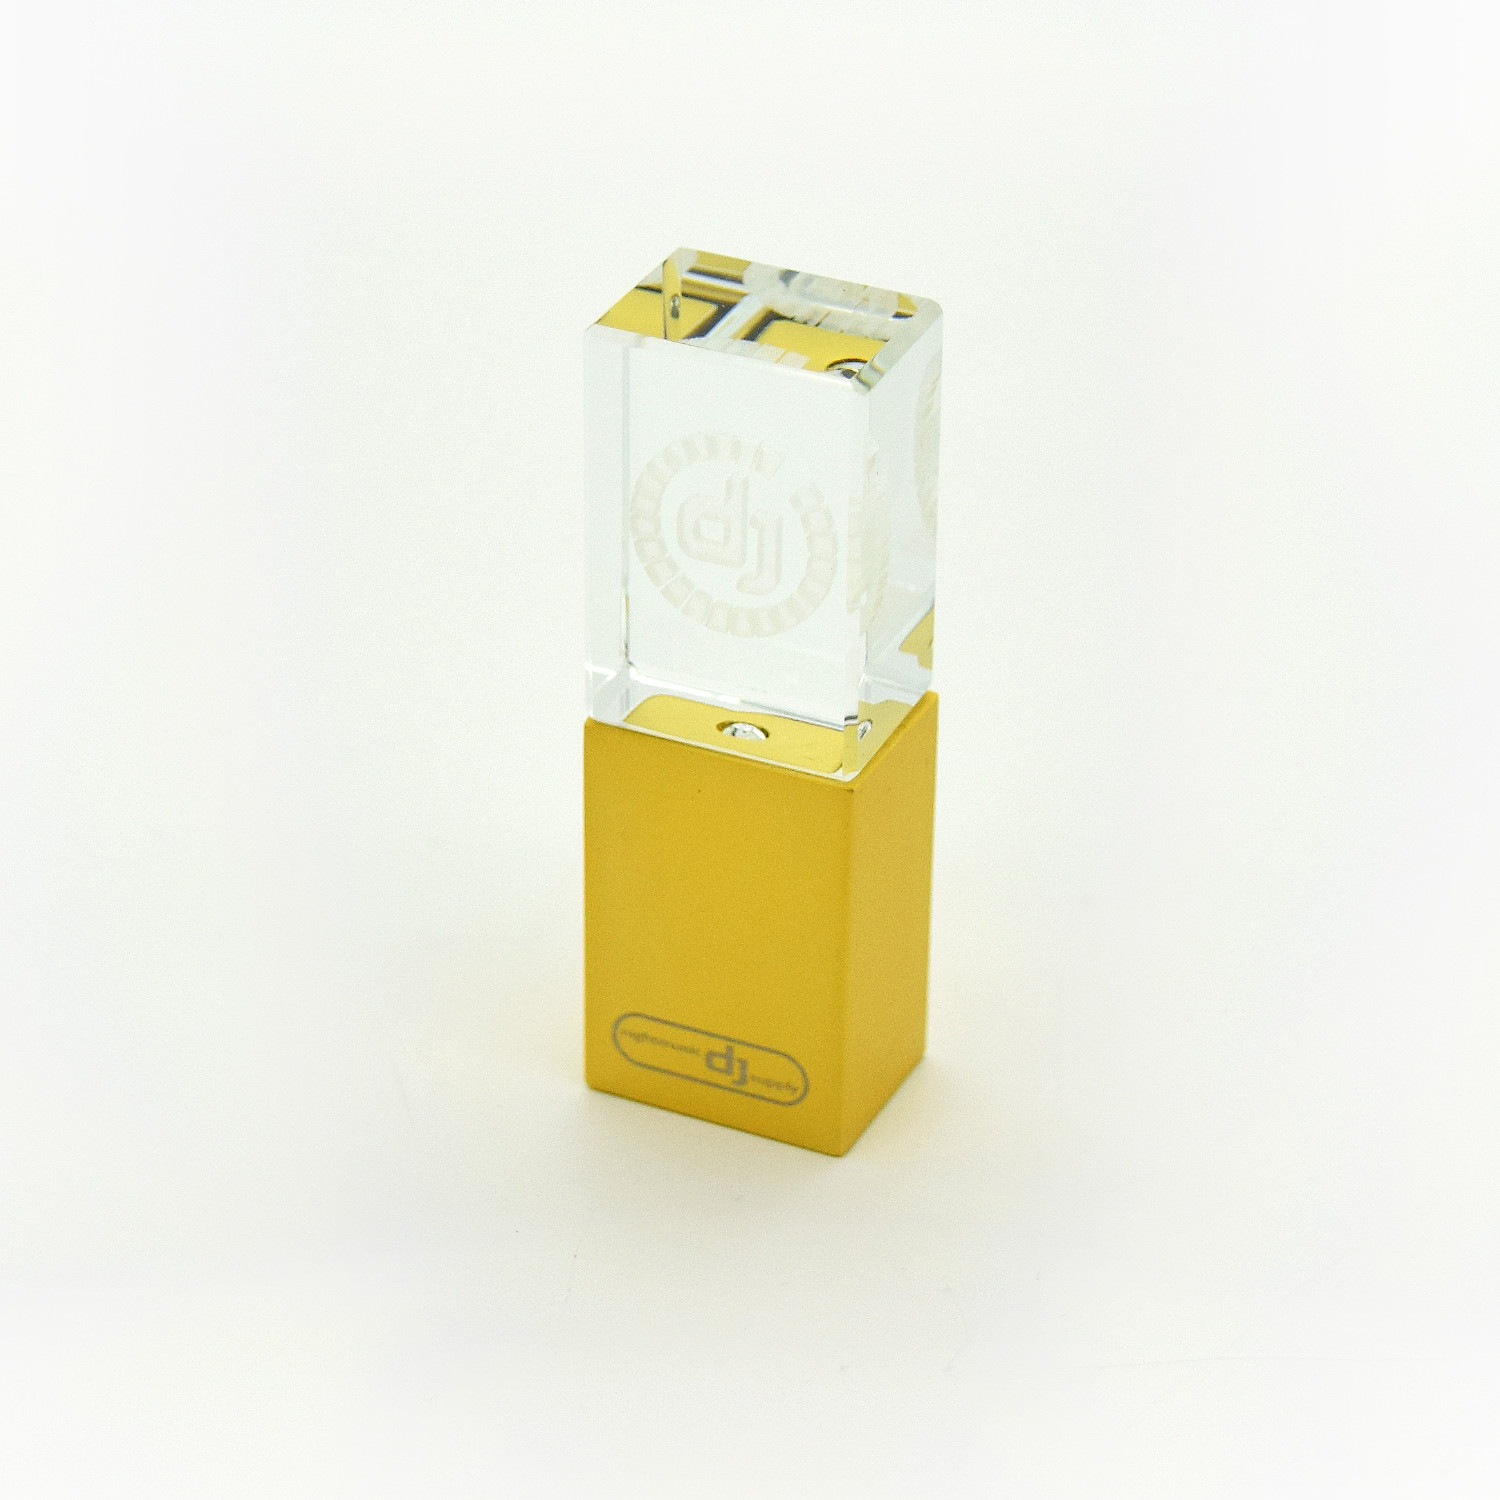 Premium Crystal DJ Stick V2 Gold - USB 3.0 32GB Flash Drive - white LED